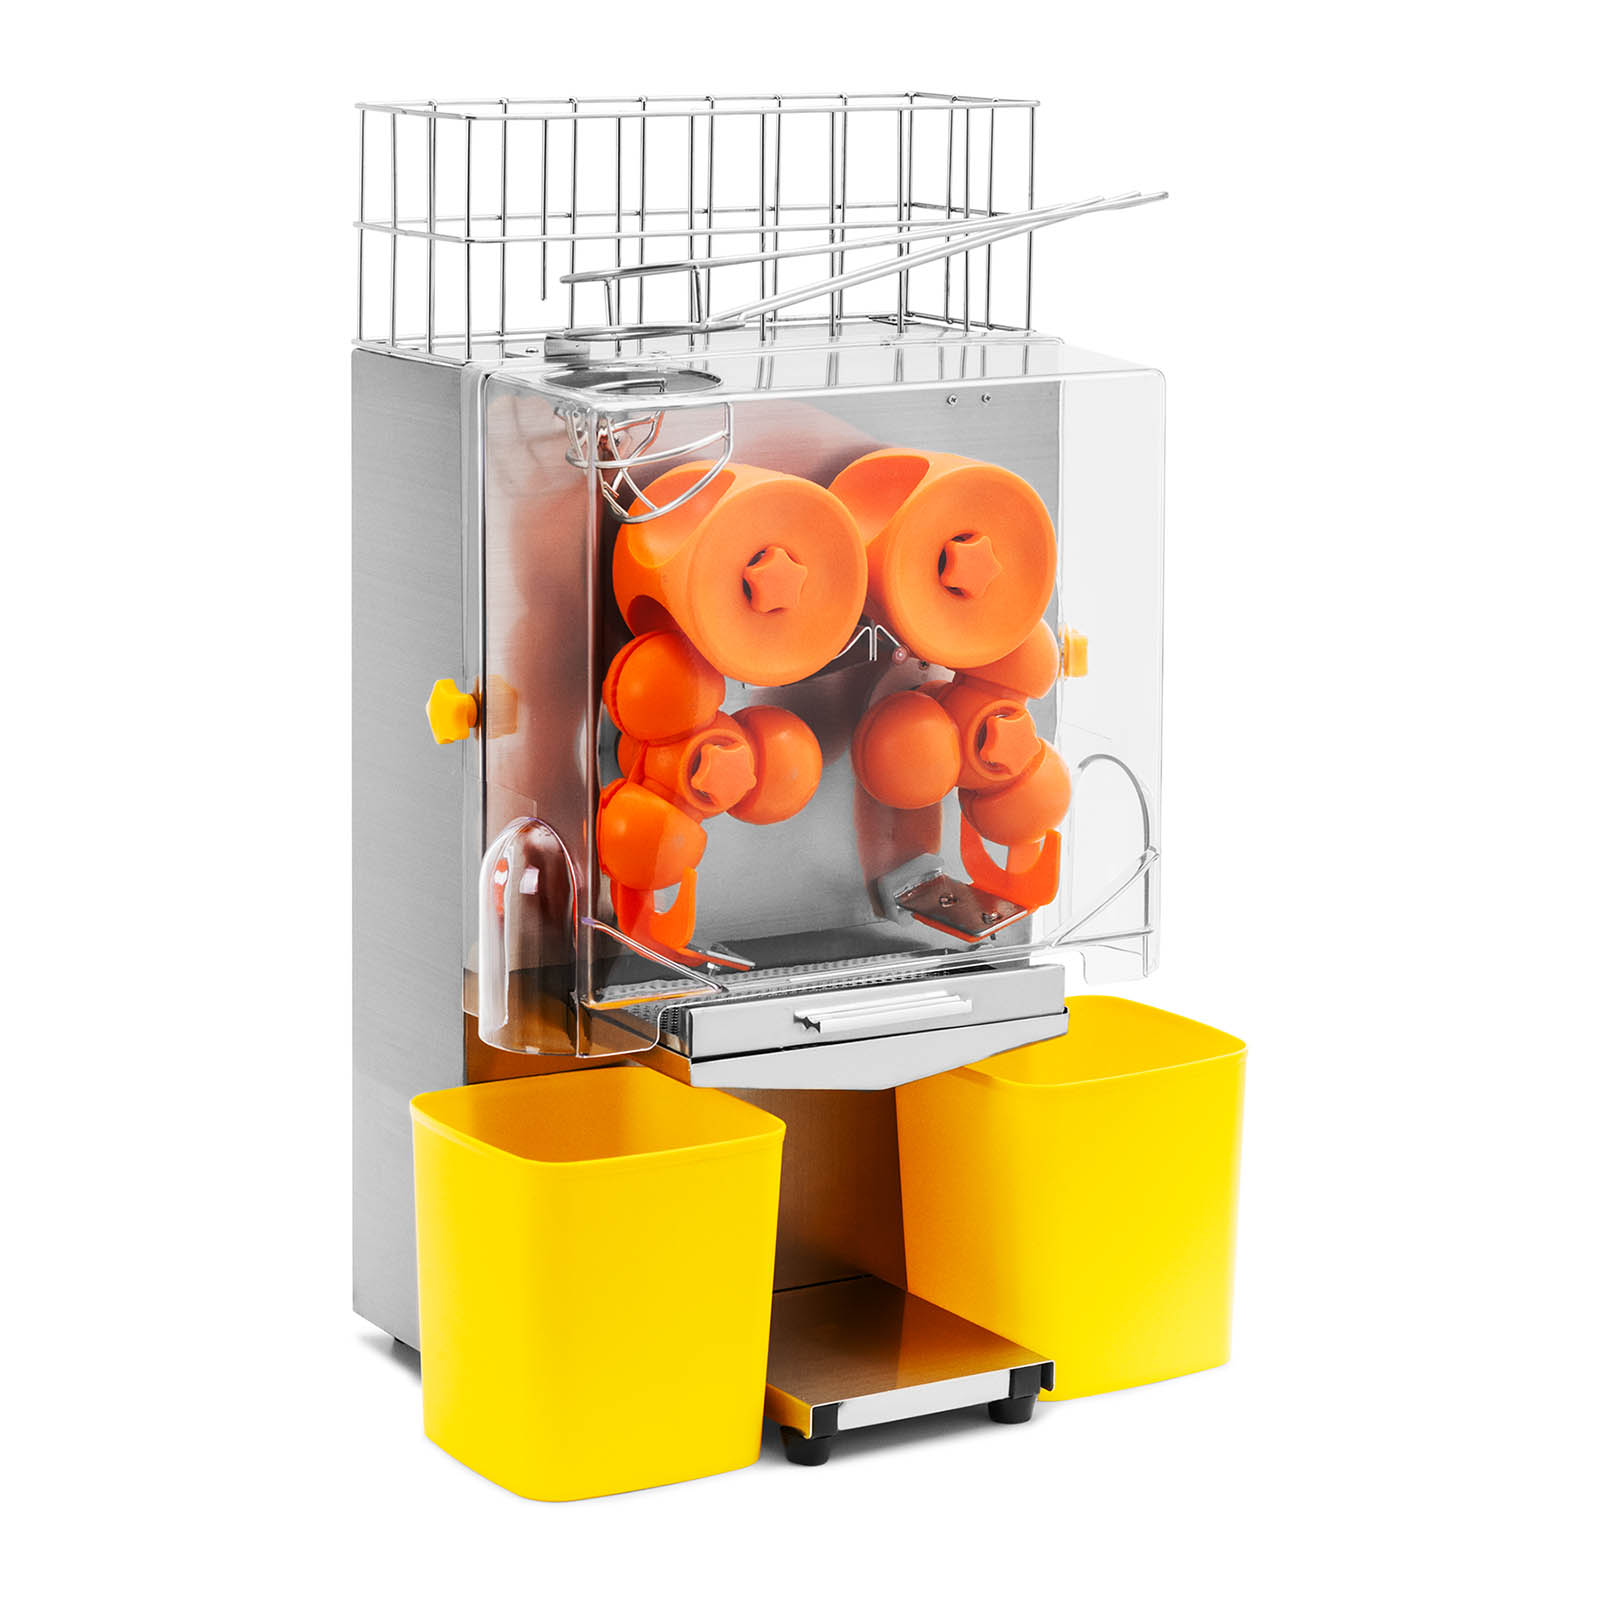 Presse orange automatique - 120 W - Royal Catering